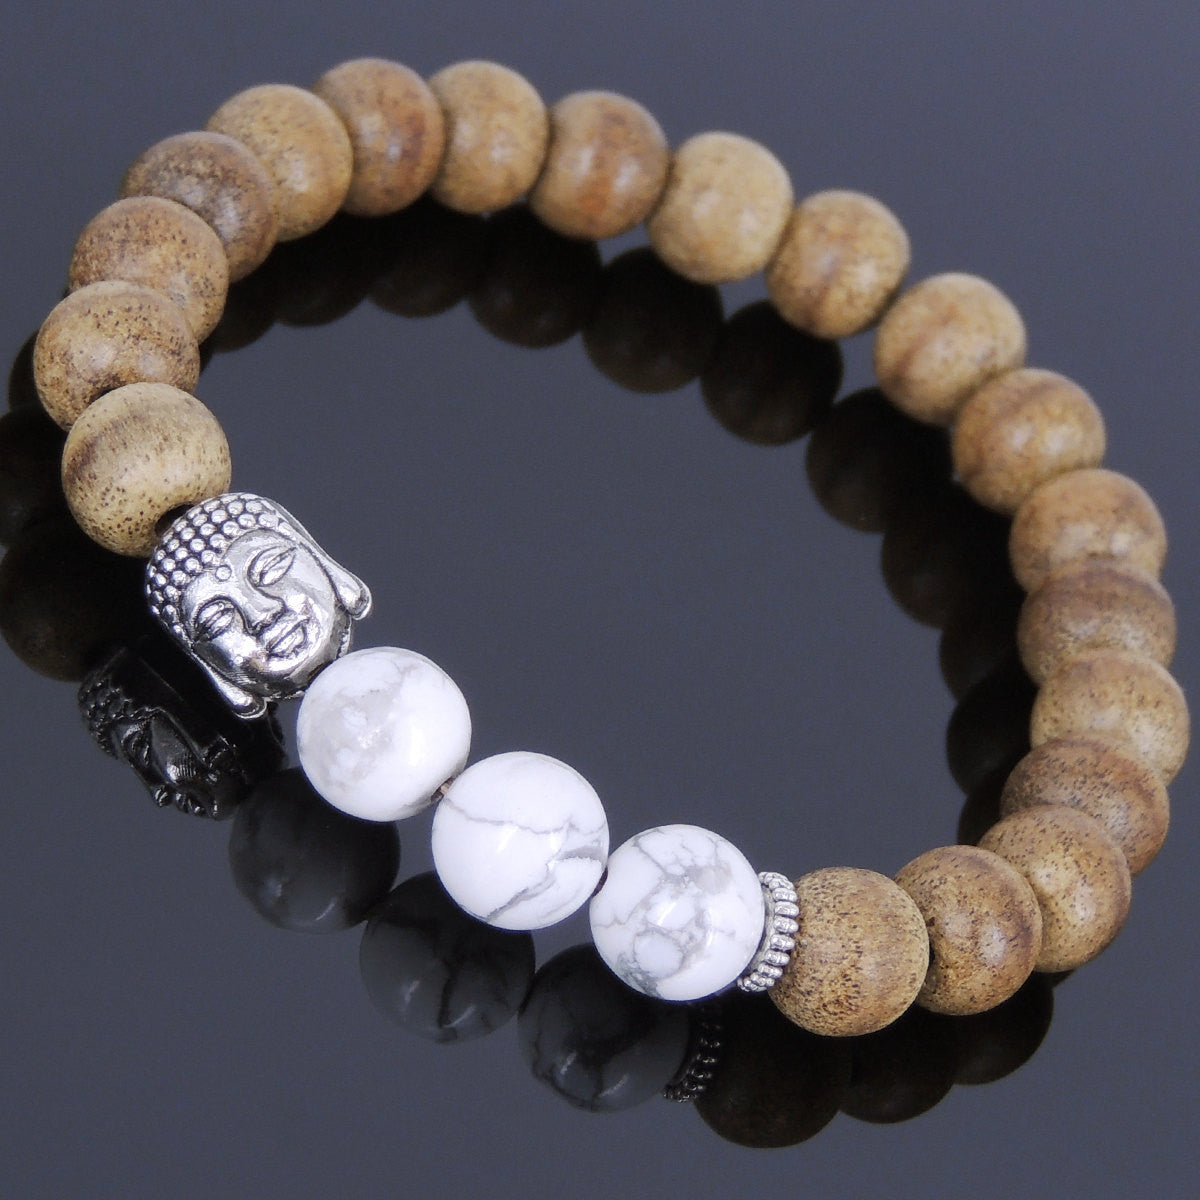 Meditation Agarwood & White Howlite Healing Gemstone Bracelet with Tibetan Silver Sakyamuni Buddha Bead & Spacer - Handmade by Gem & Silver AWB032